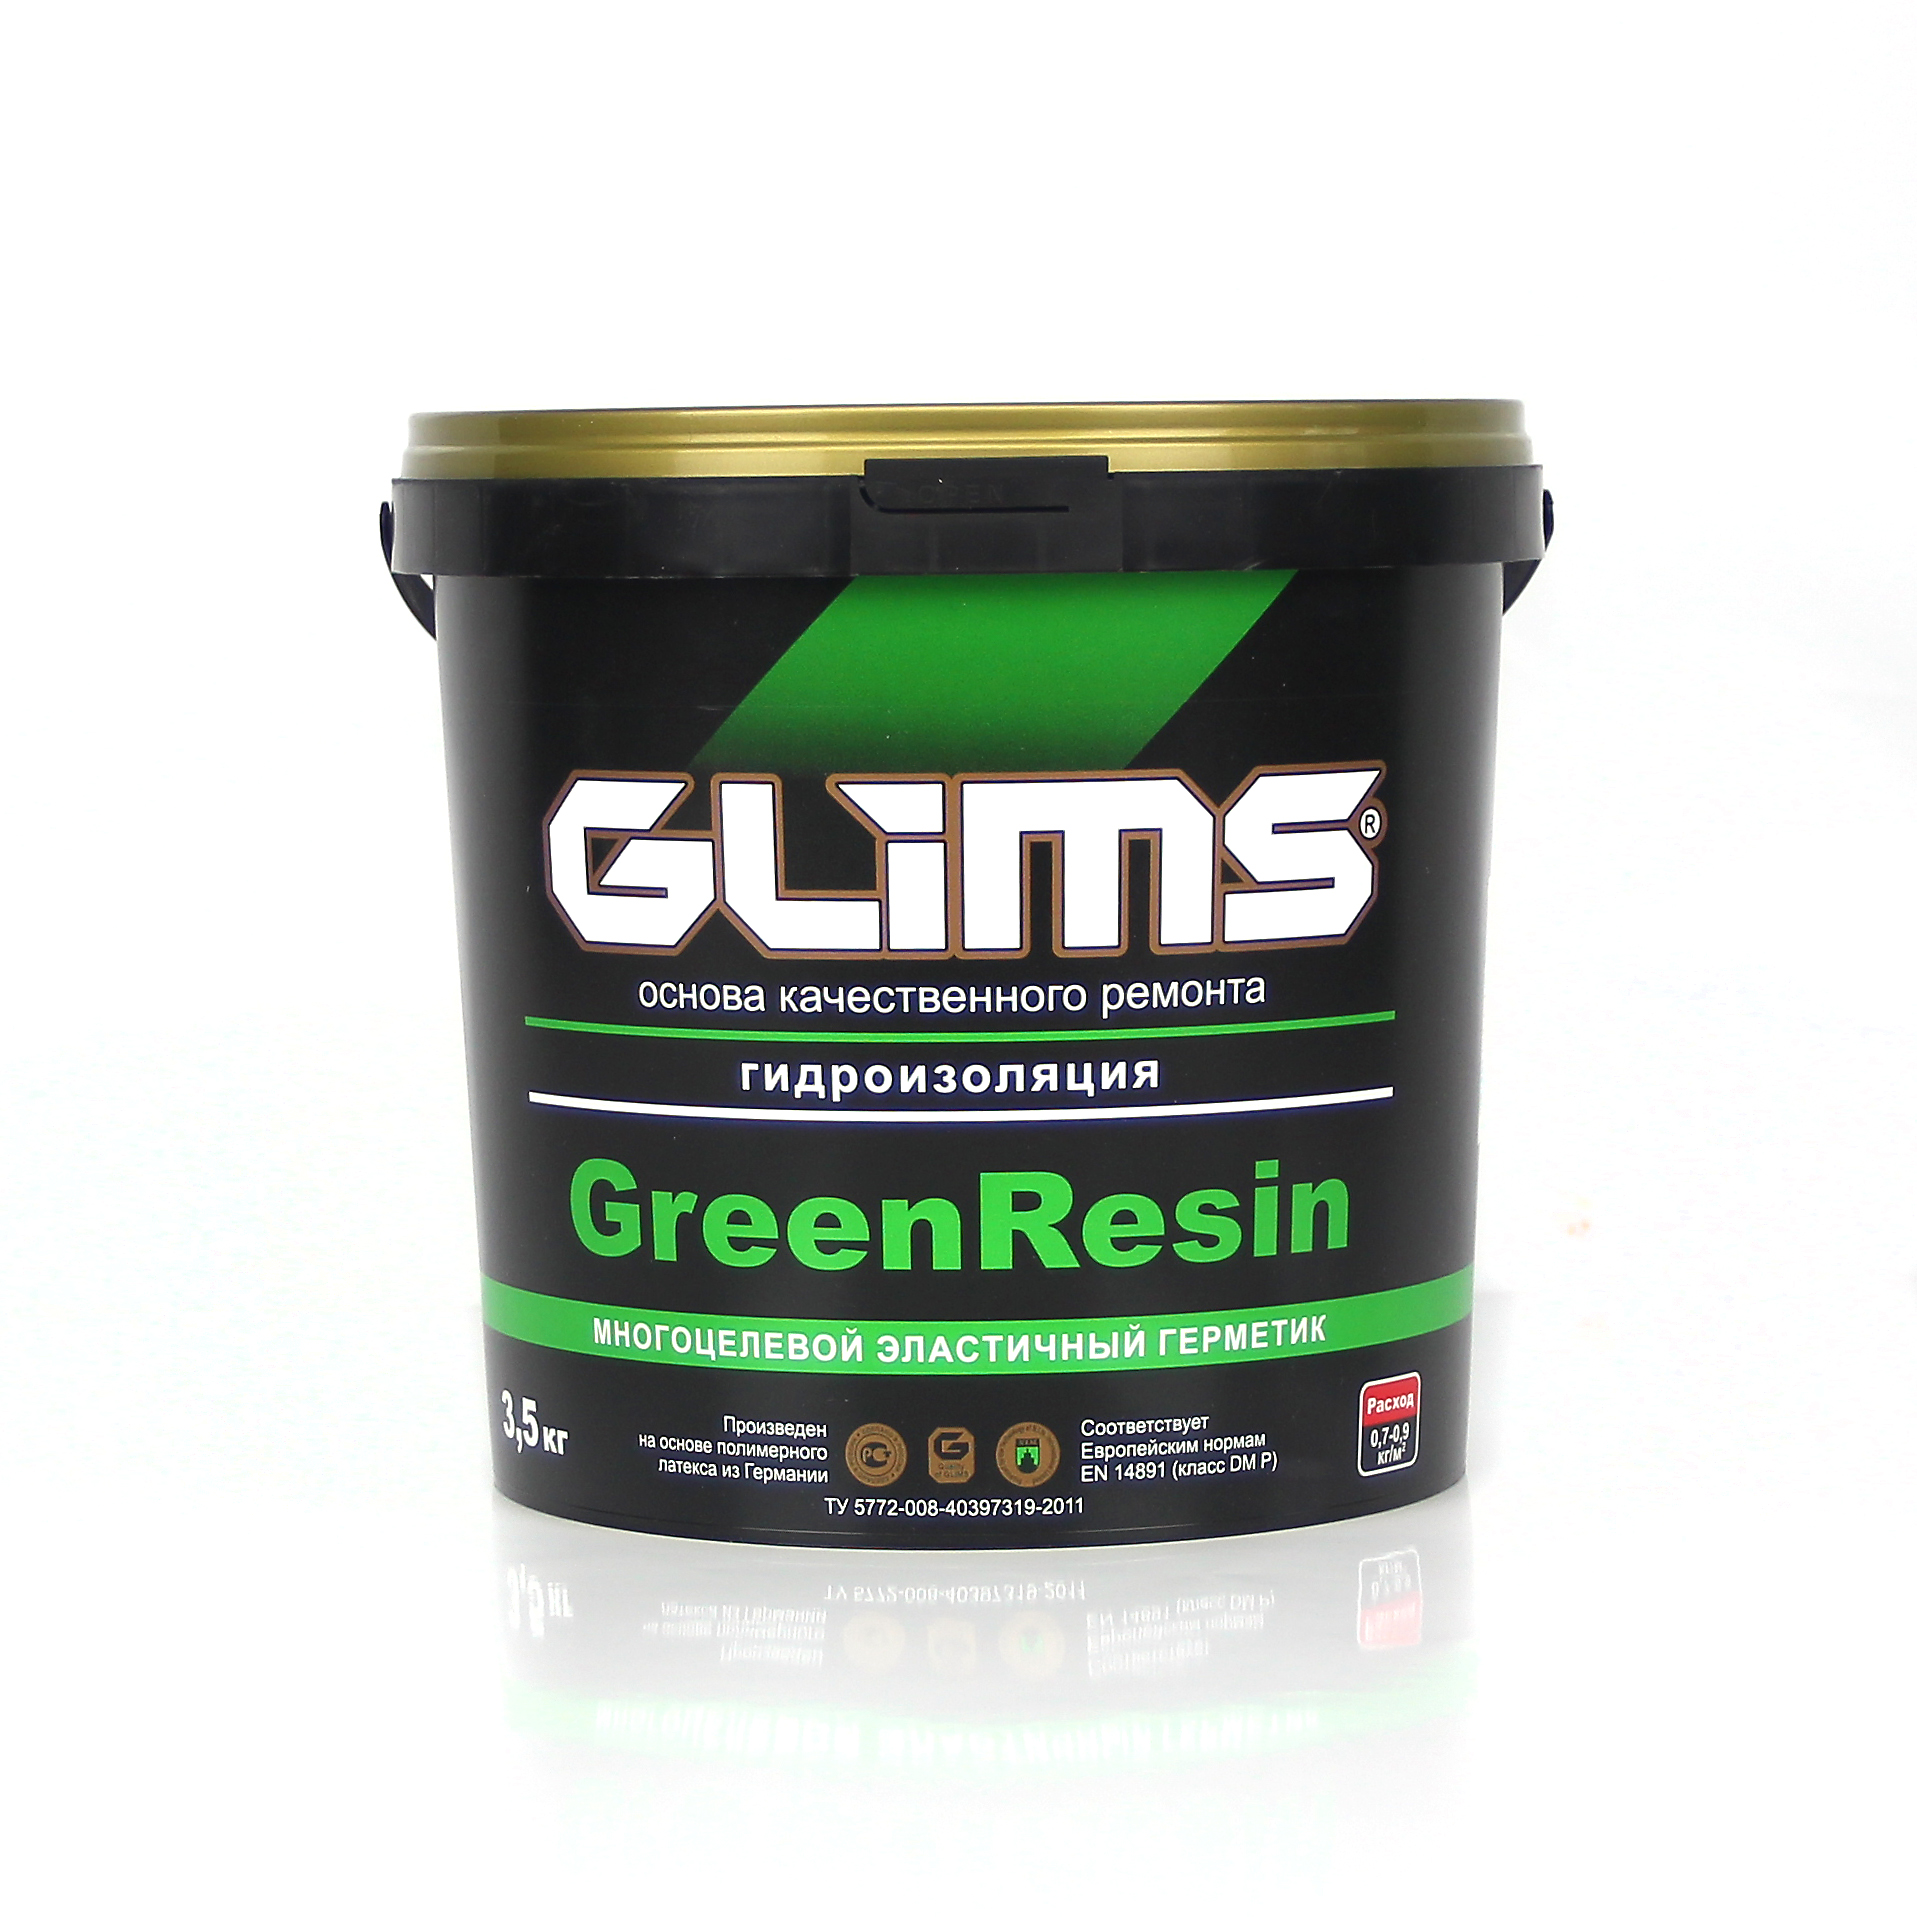 Гидроизоляция GLIMS GreenResin обмазочная на водной основе, 3.5 кг гидроизоляция glims greenresin обмазочная на водной основе 3 5 кг